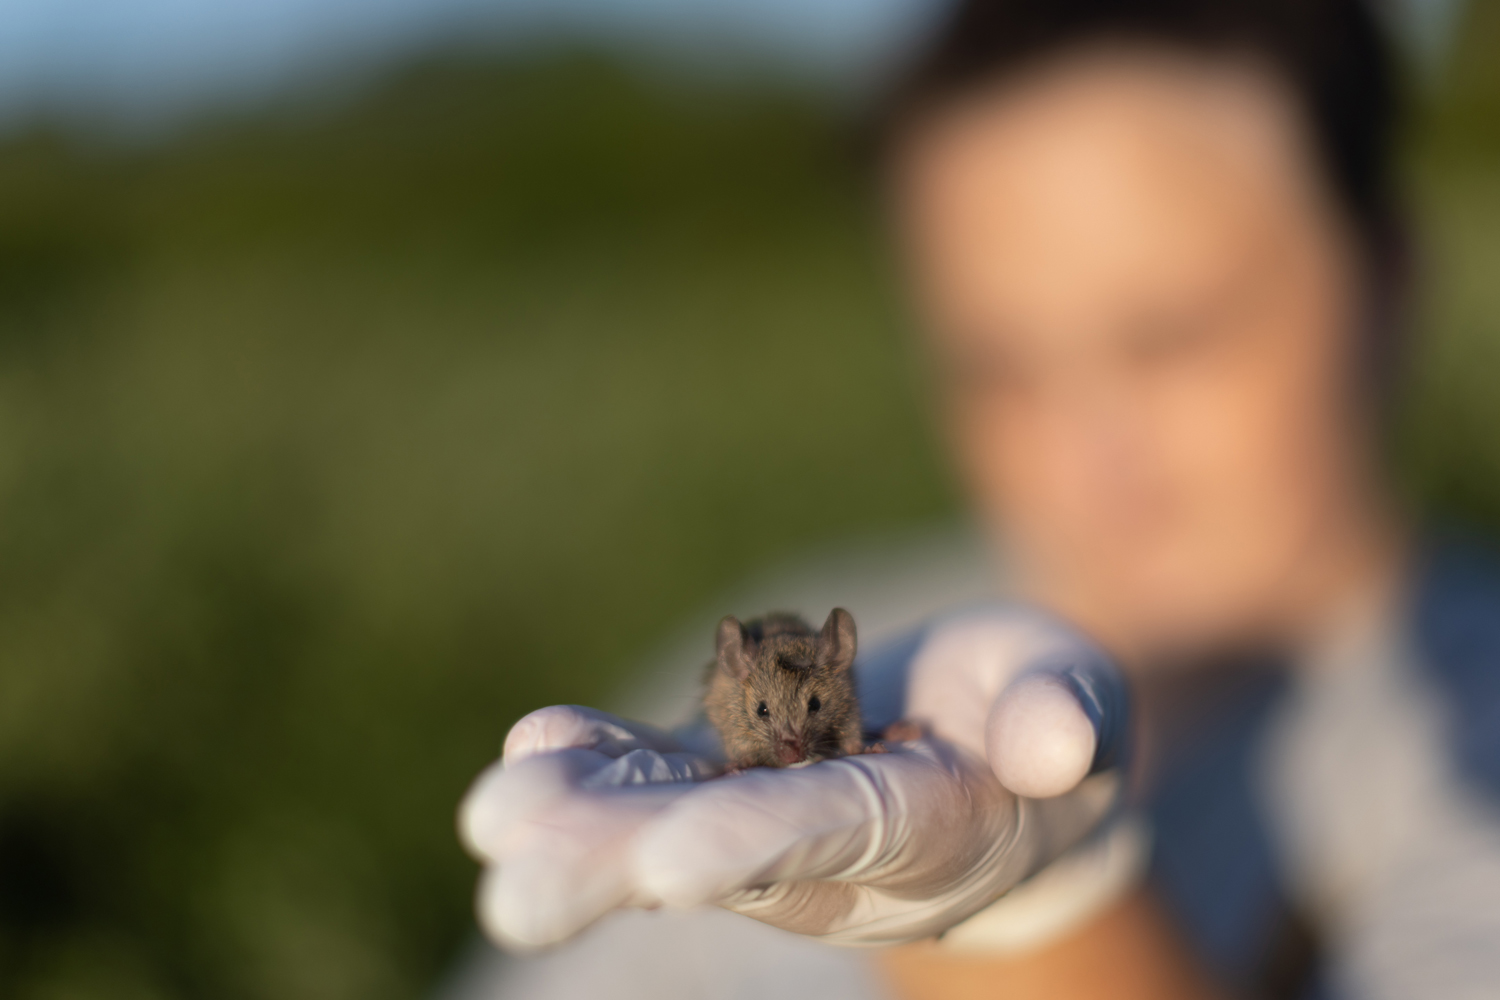 Melissa Vindigini holds a field mouse